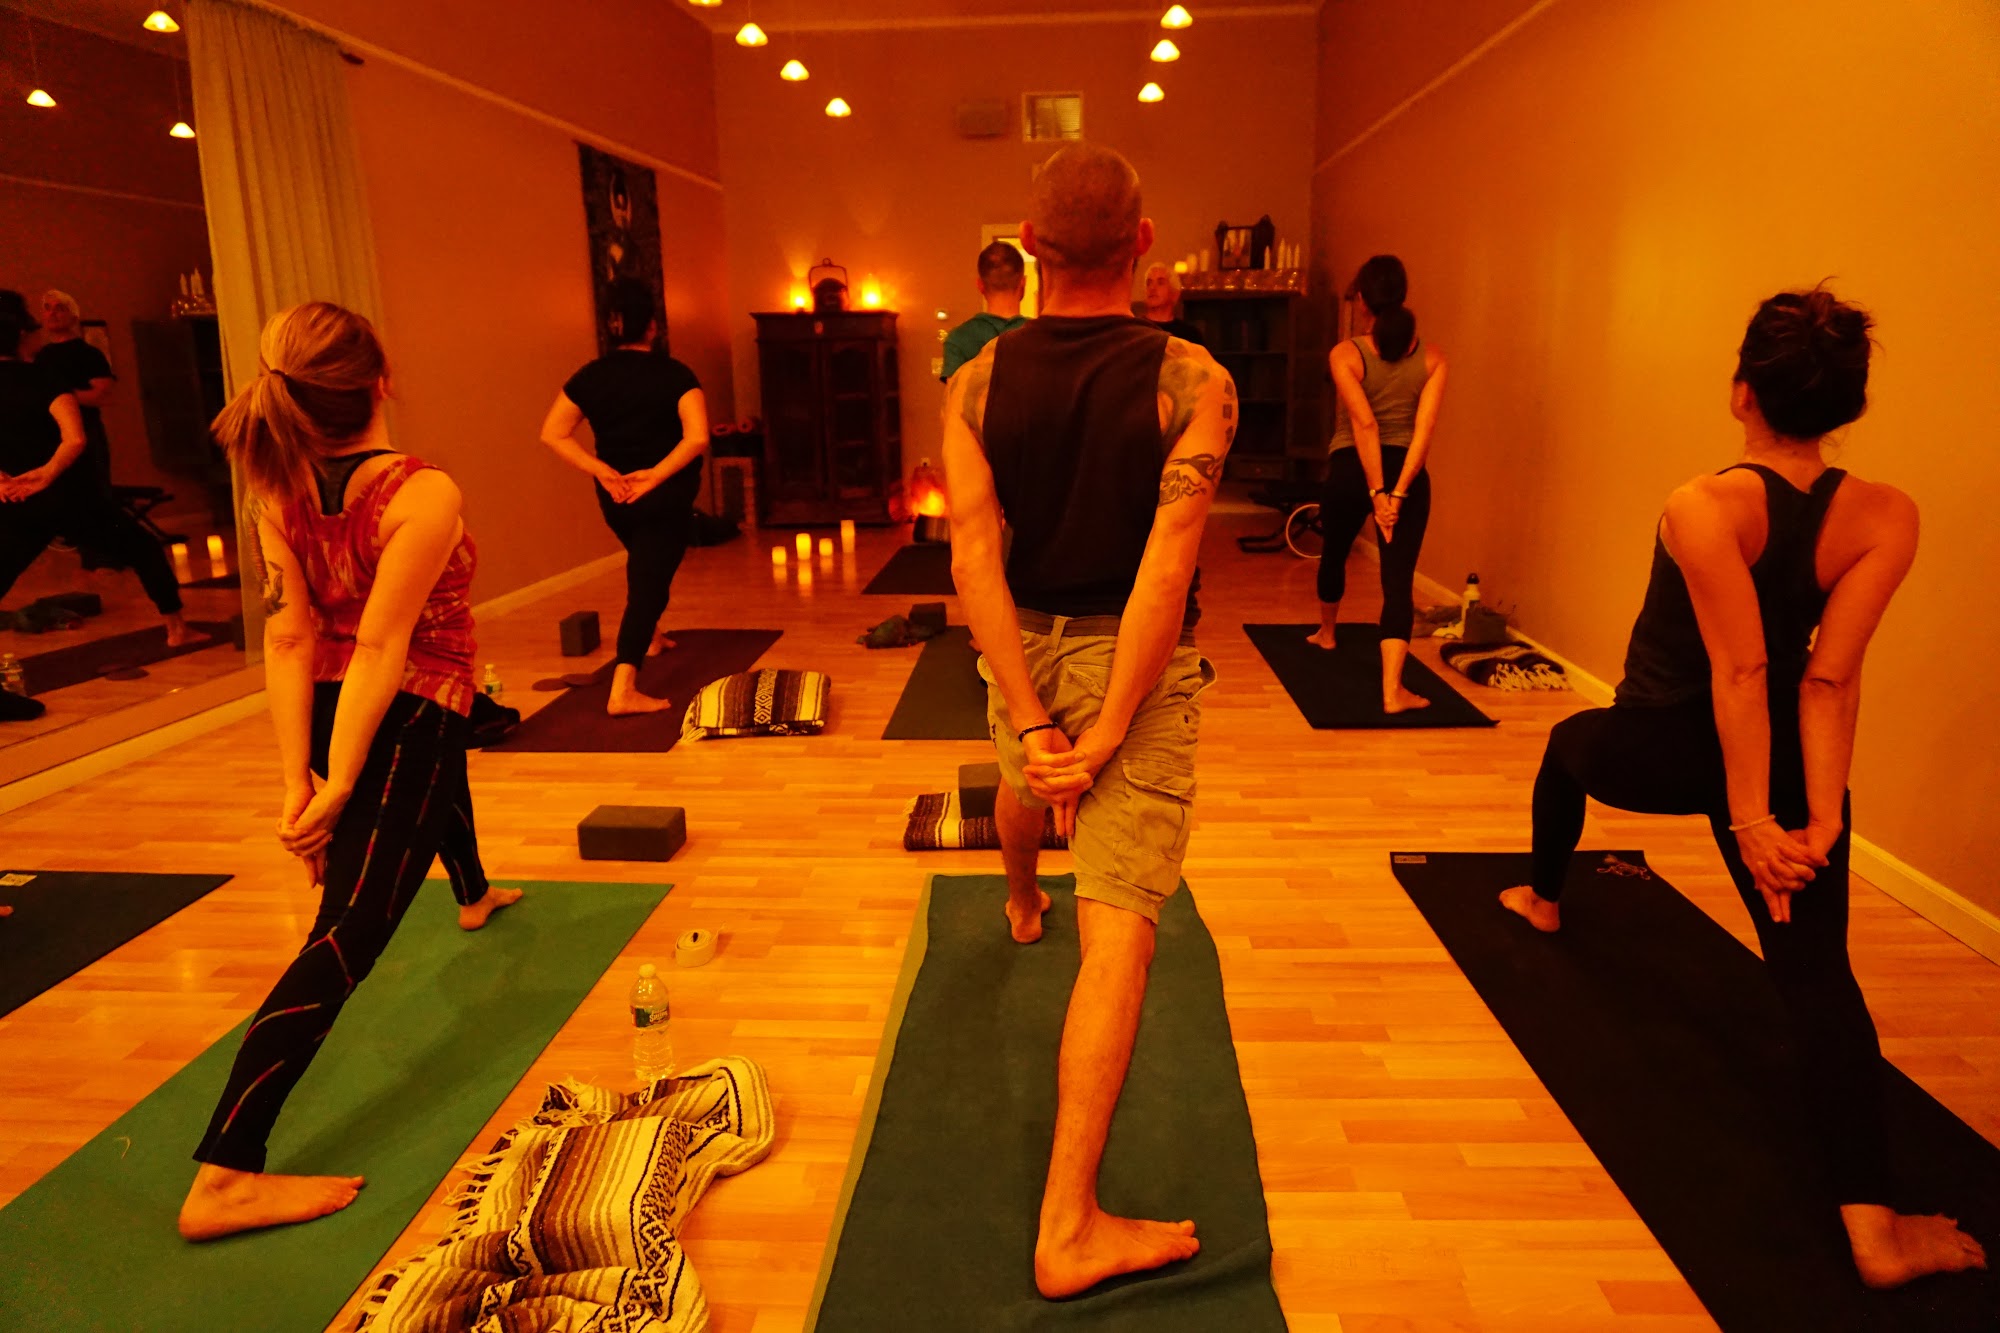 The Joyful Living Yoga Center 726 Arnold Ave, Point Pleasant Beach New Jersey 08742